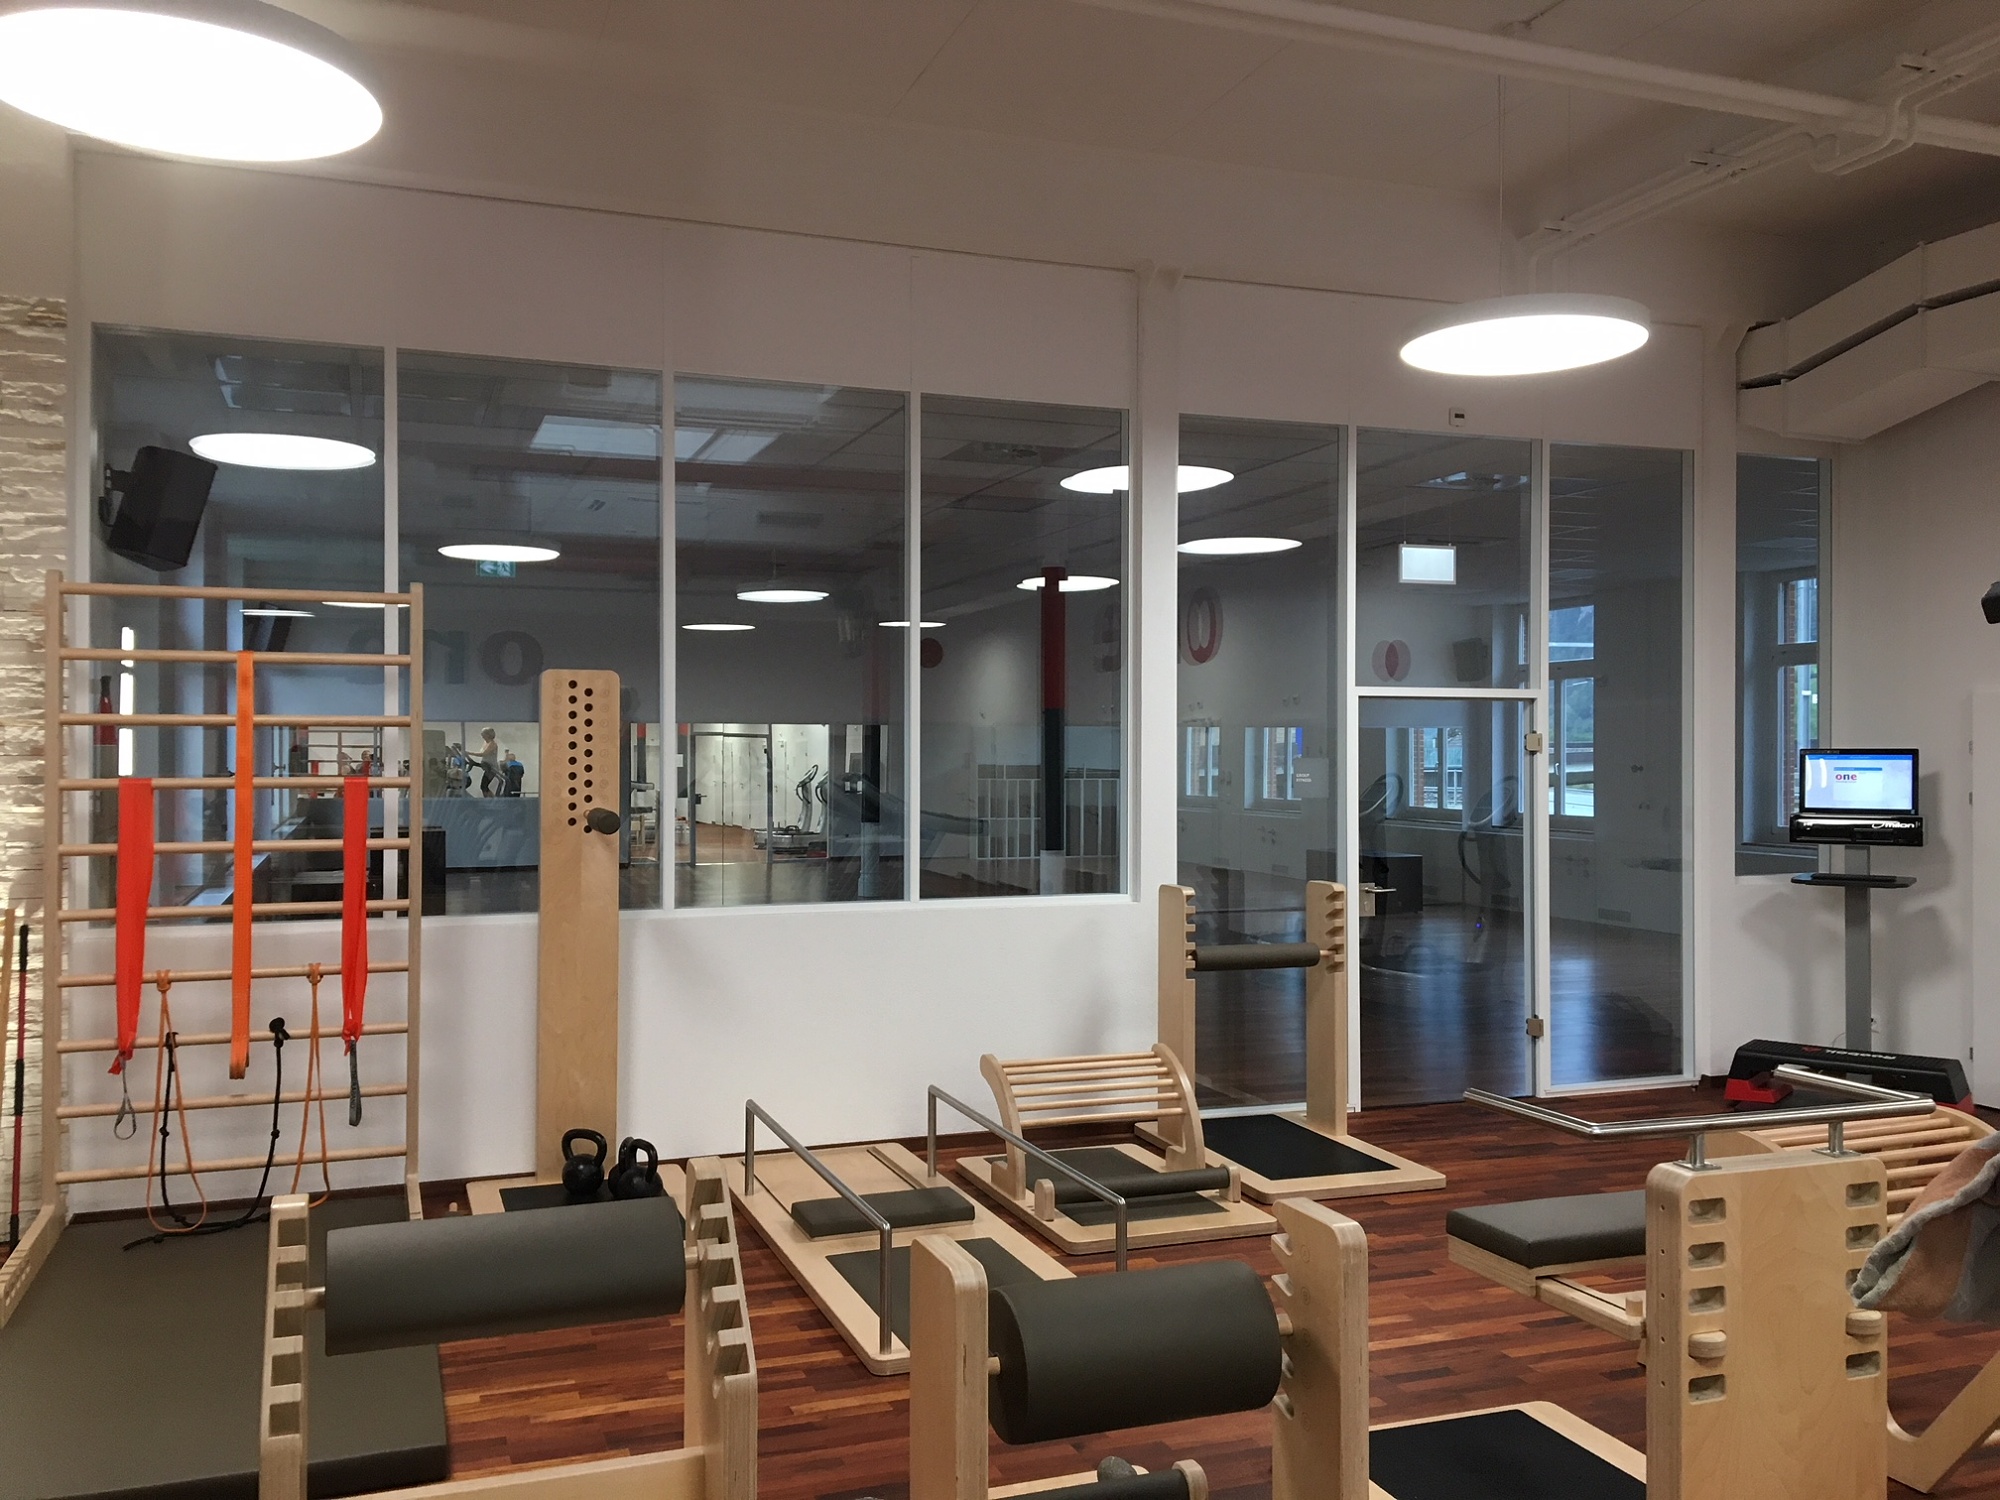 Fabrikhalle Fitness Center reconstruction in Altdorf, Switzerland